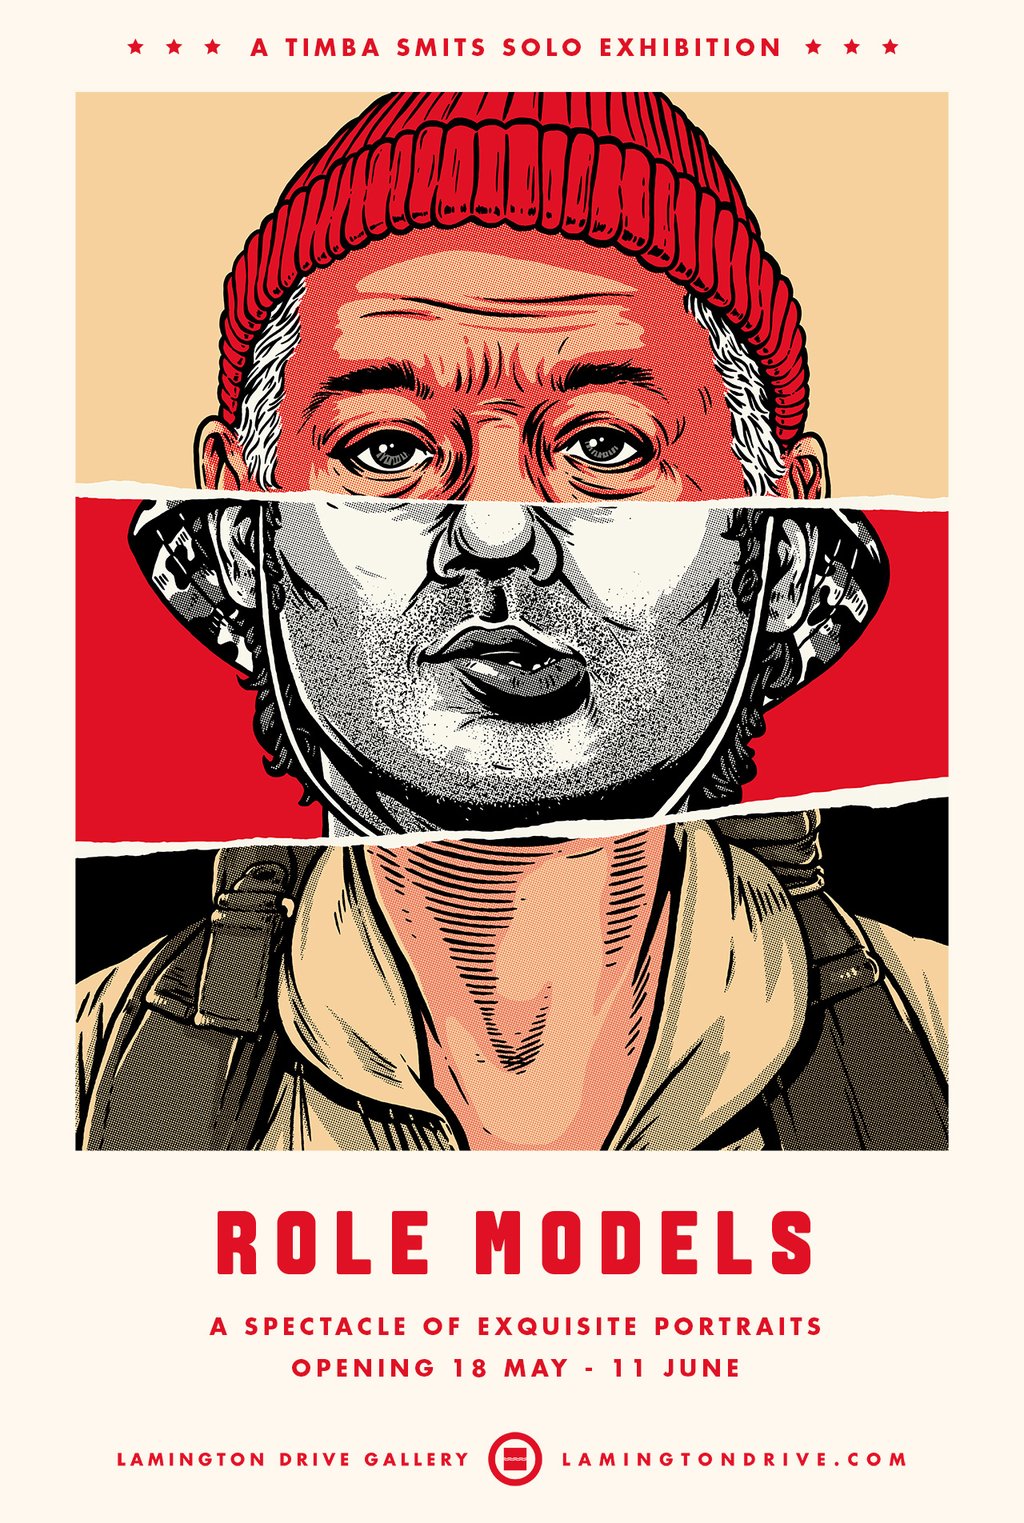 Role Models: a exposição de Timba Smits na Lamington Drive Gallery